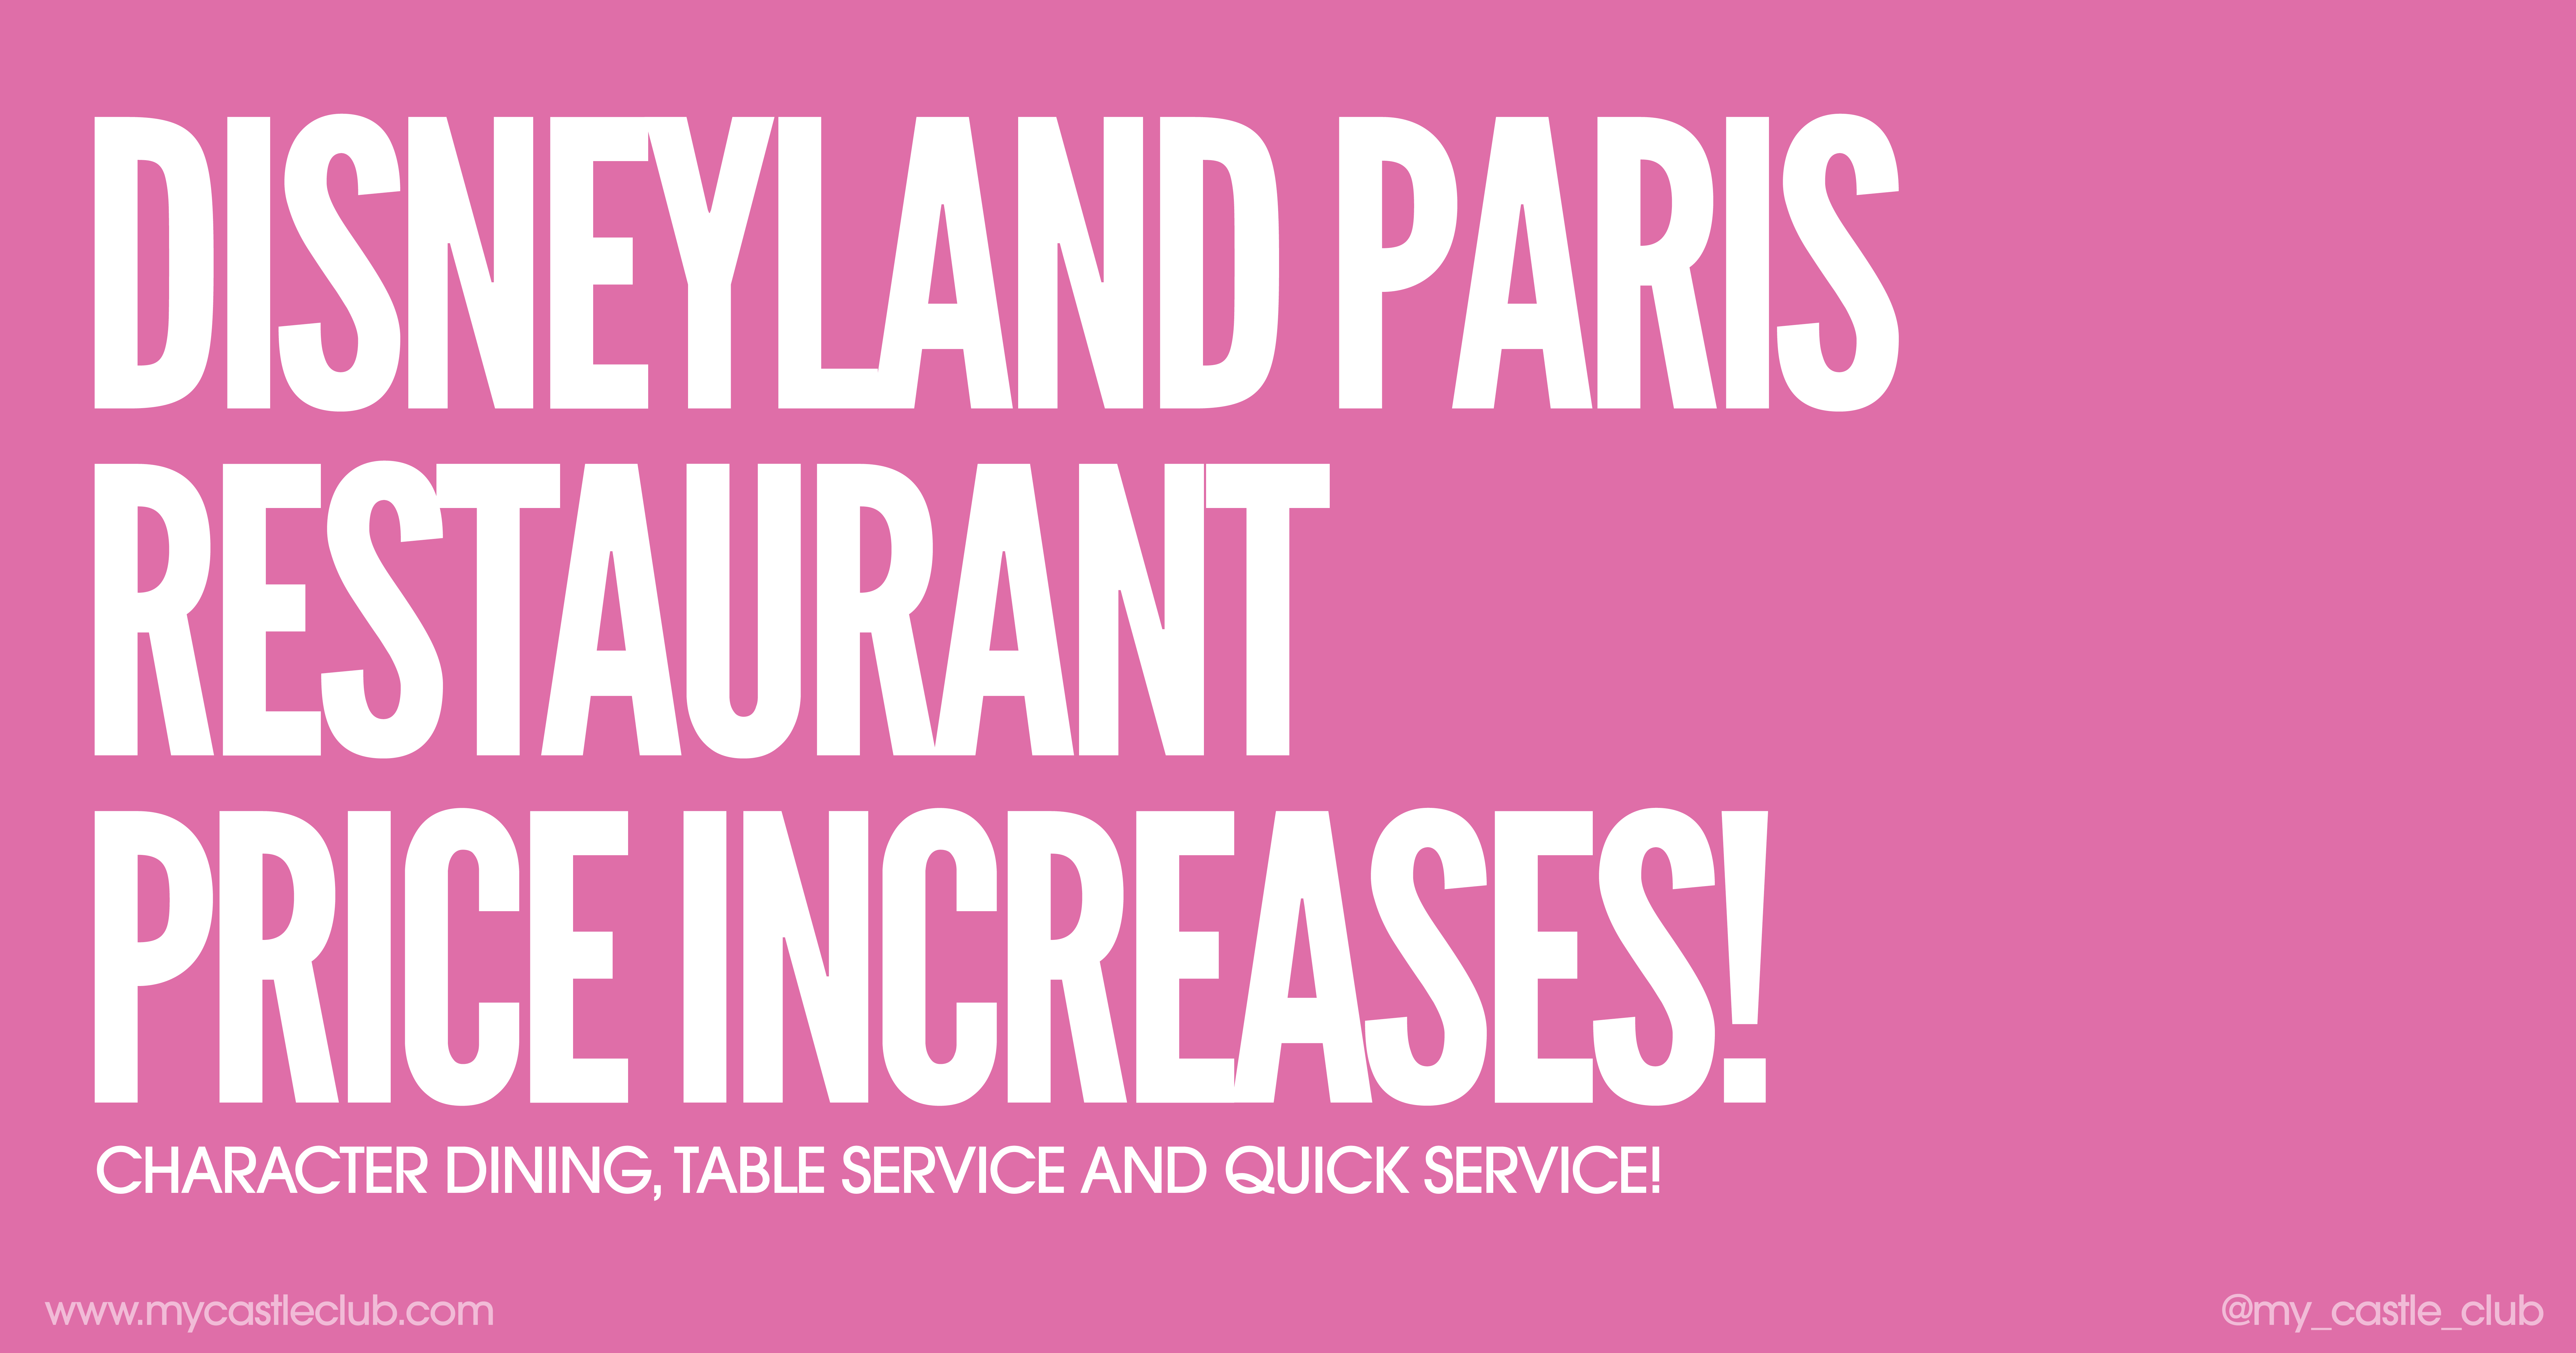 Disneyland Paris Sees Massive Restaurant and Quick Service Price Increases